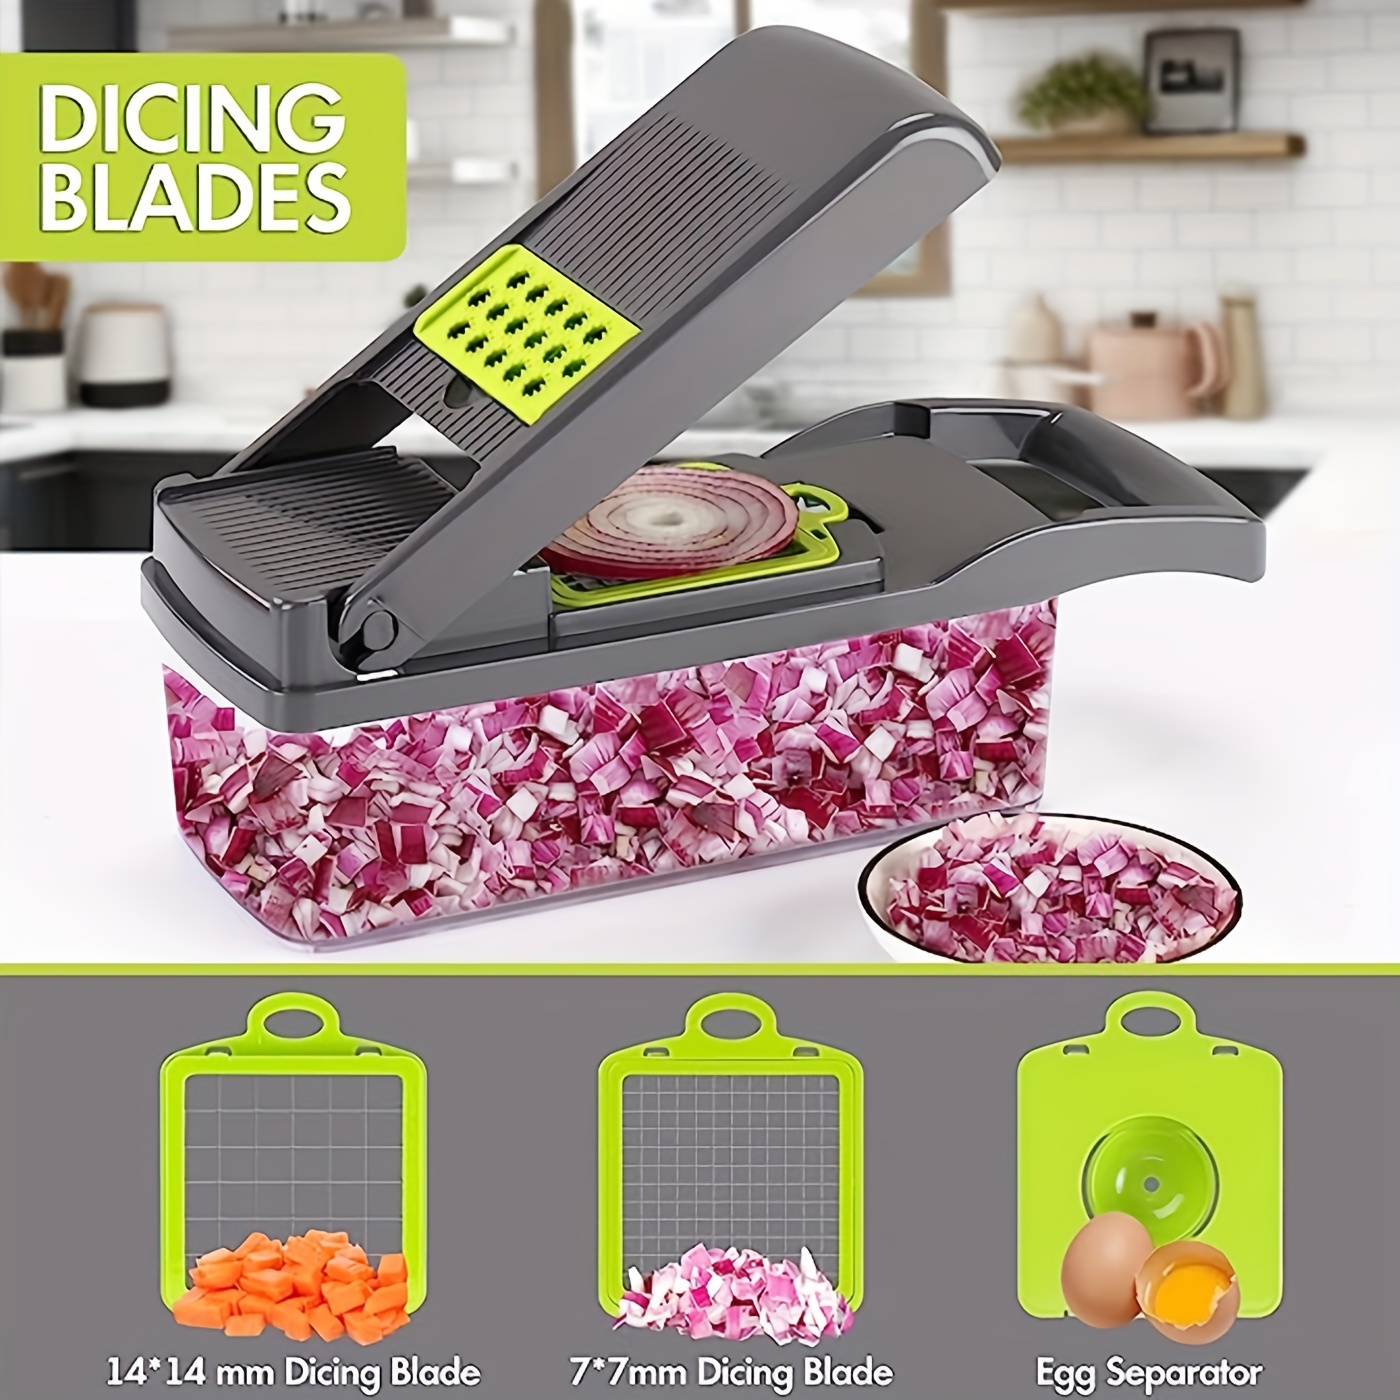 12pcs Multi-functional Vegetable Cutter For Potato Onion, Manual Slicer And  Dicer, Carrot Grater Shredder, Kitchen Tool Set